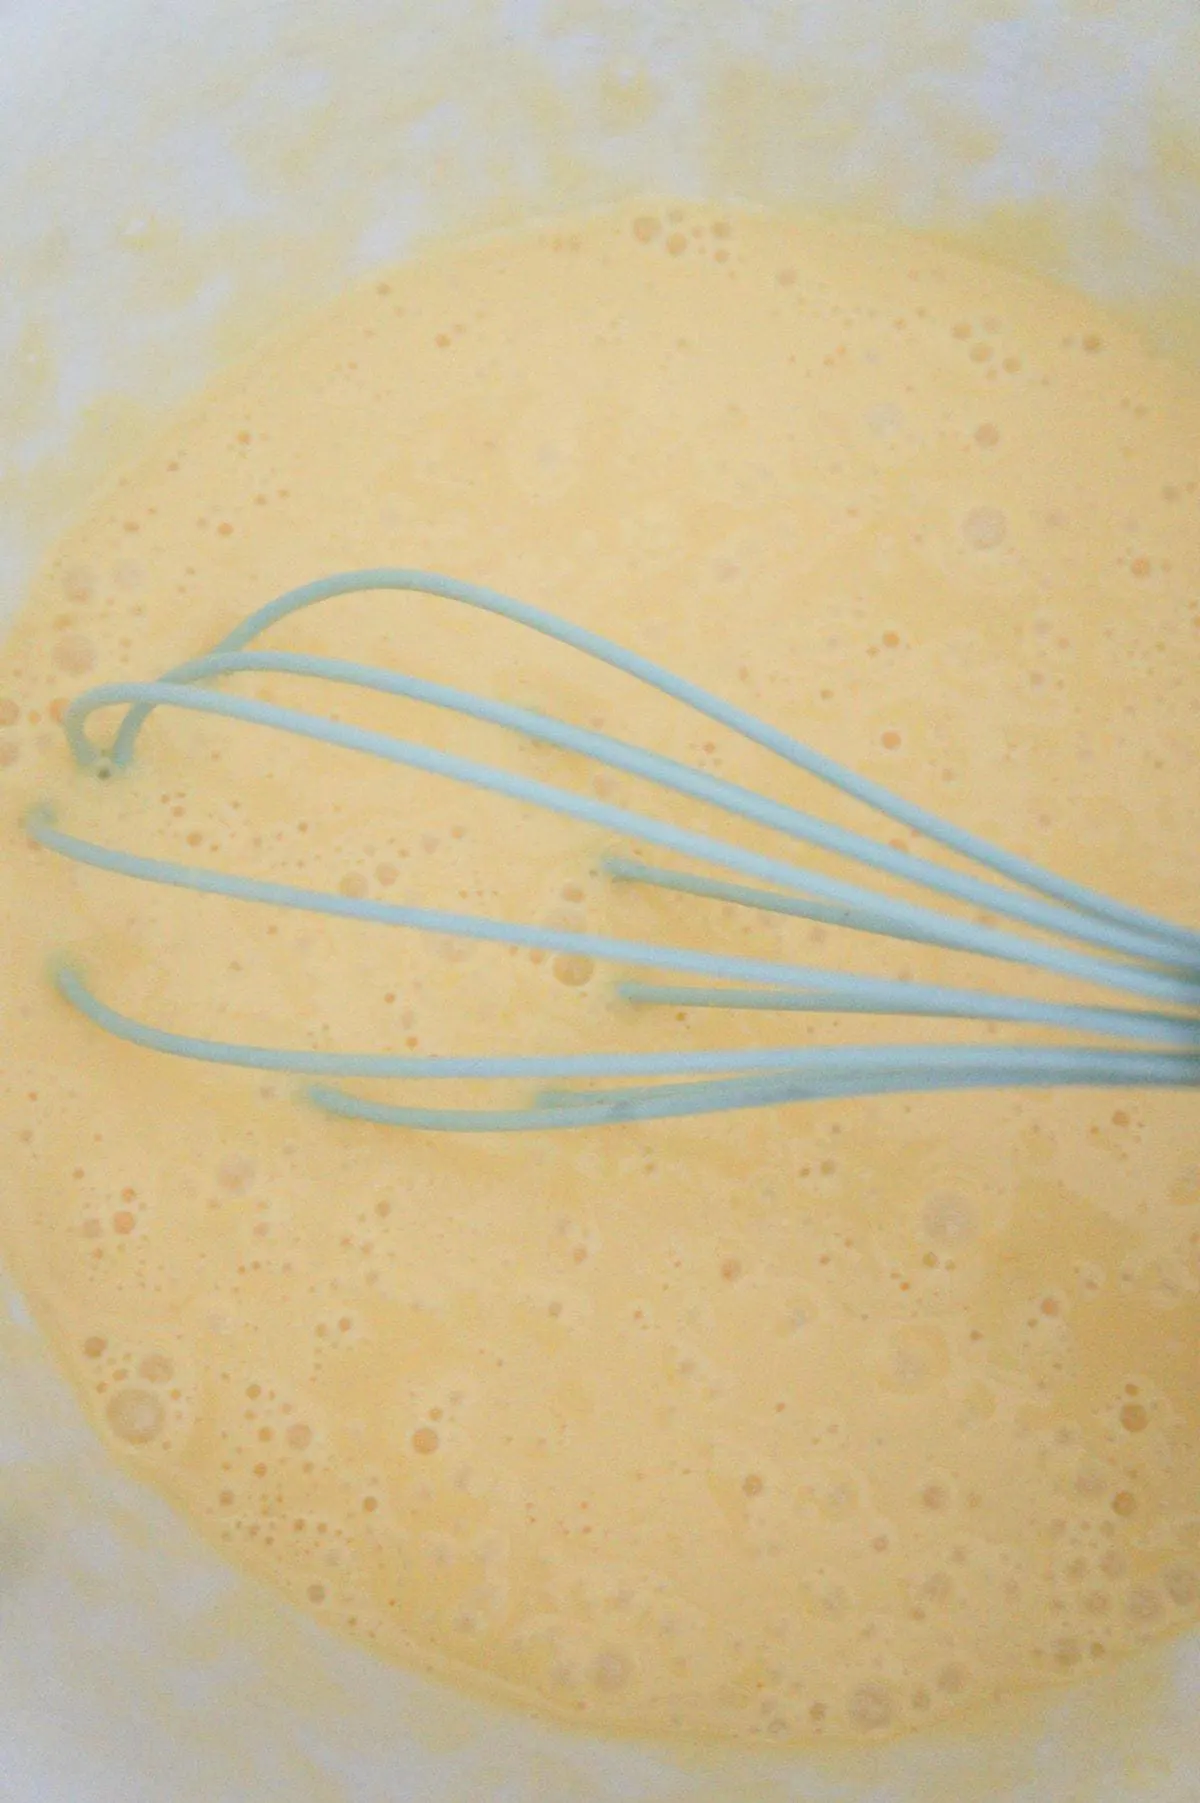 beaten egg mixture in a mixing bowl